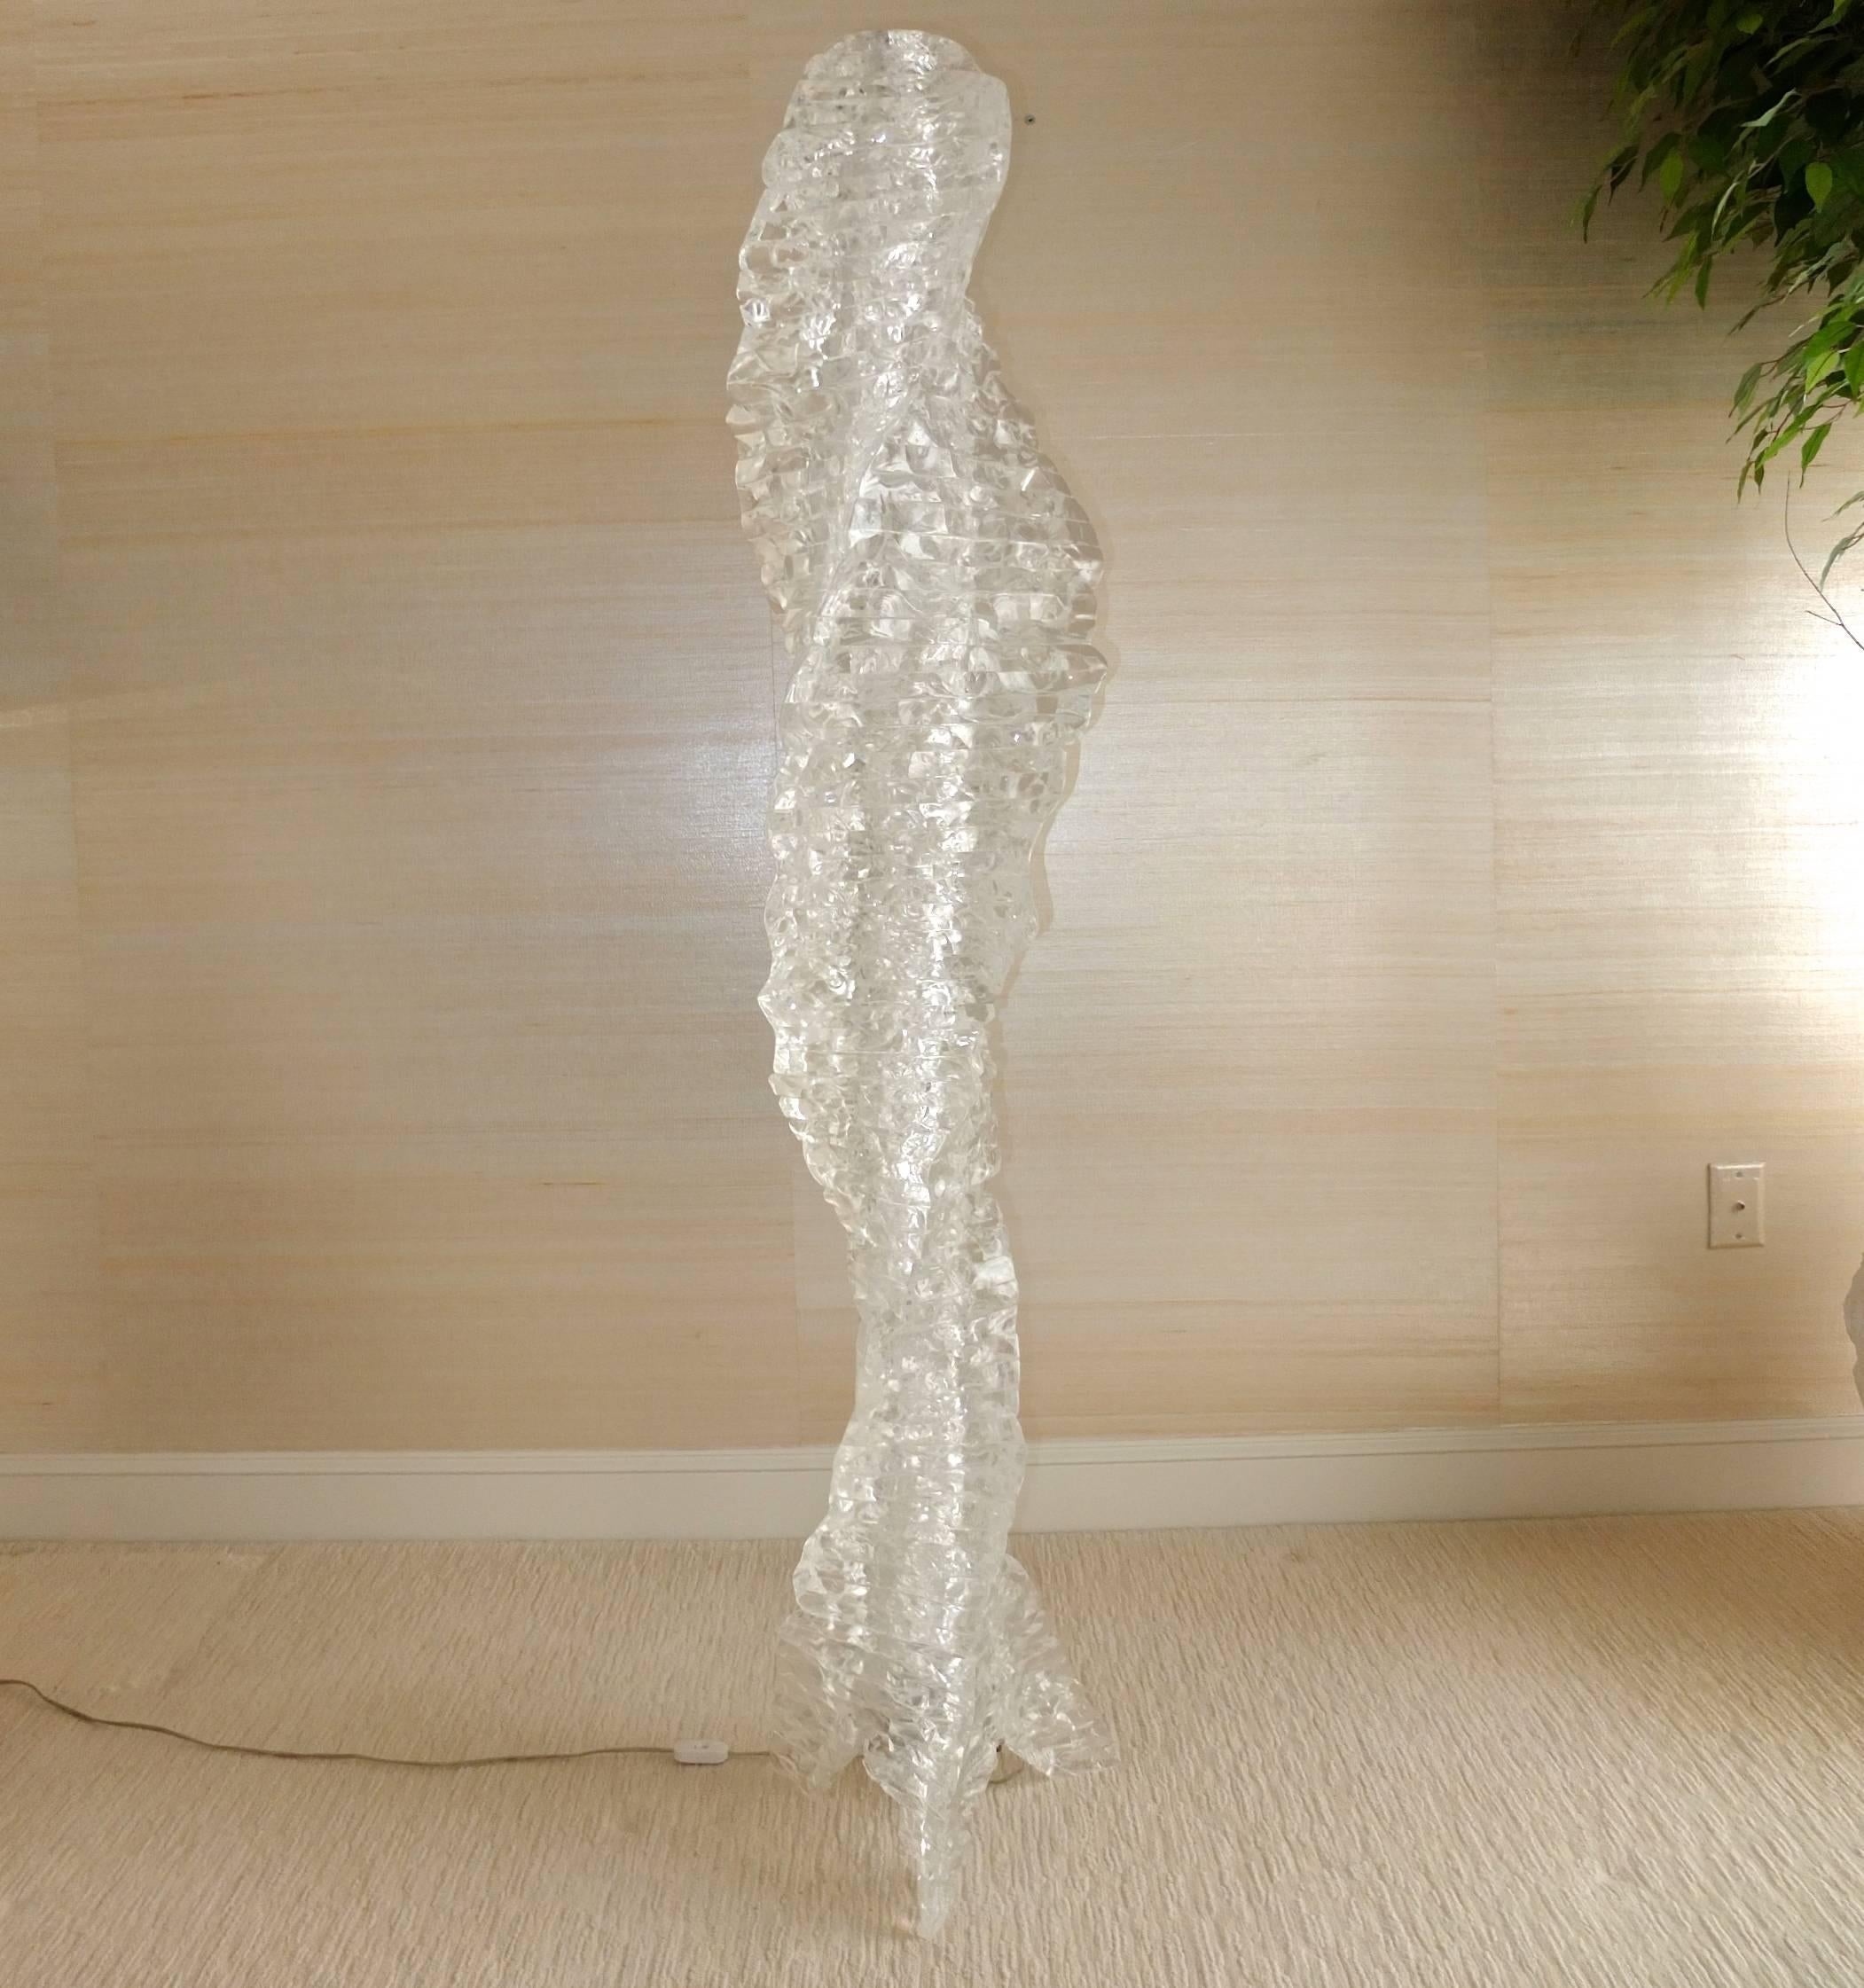 Illuminated helix form floor sculpture entitled 